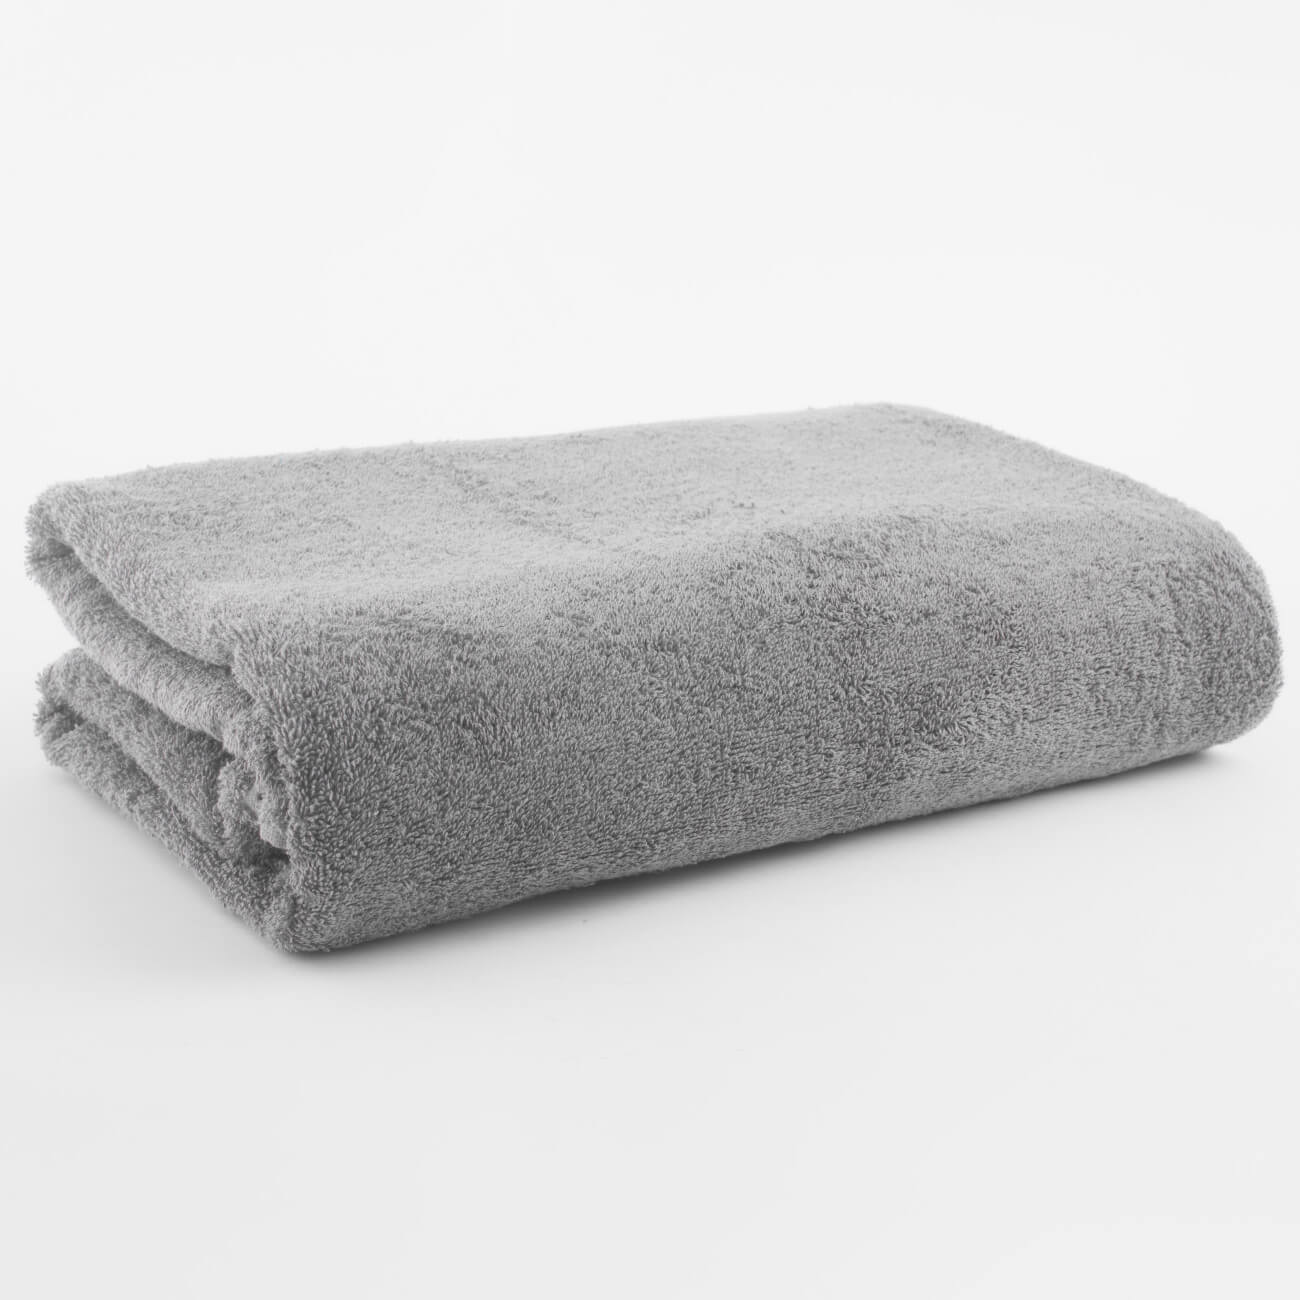 Полотенце, 100х150 см, хлопок, серое, Wellness бумажное полотенце лайма